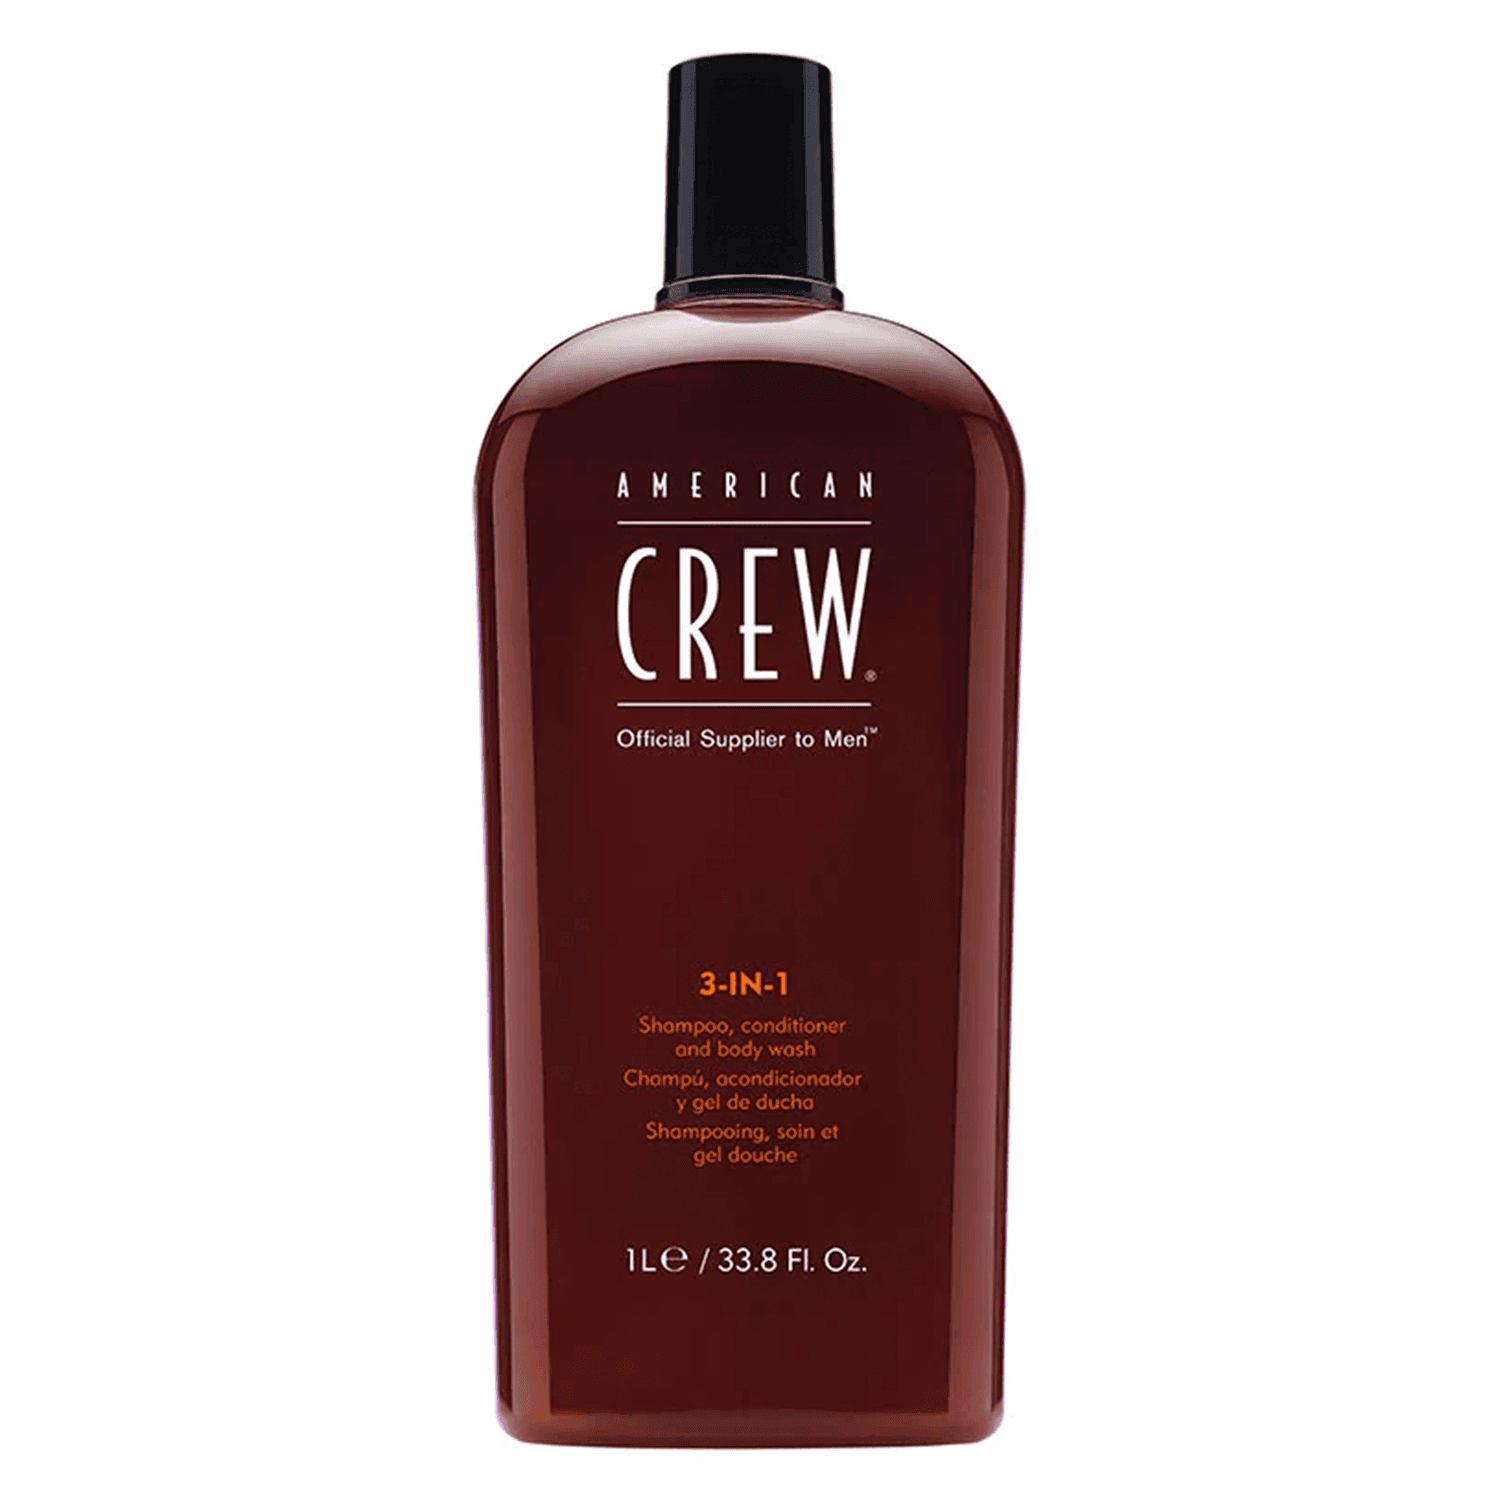 Crew Hair & Body Care - American Crew Classic 3-in-1 Shampoo, Conditioner & Body Wash